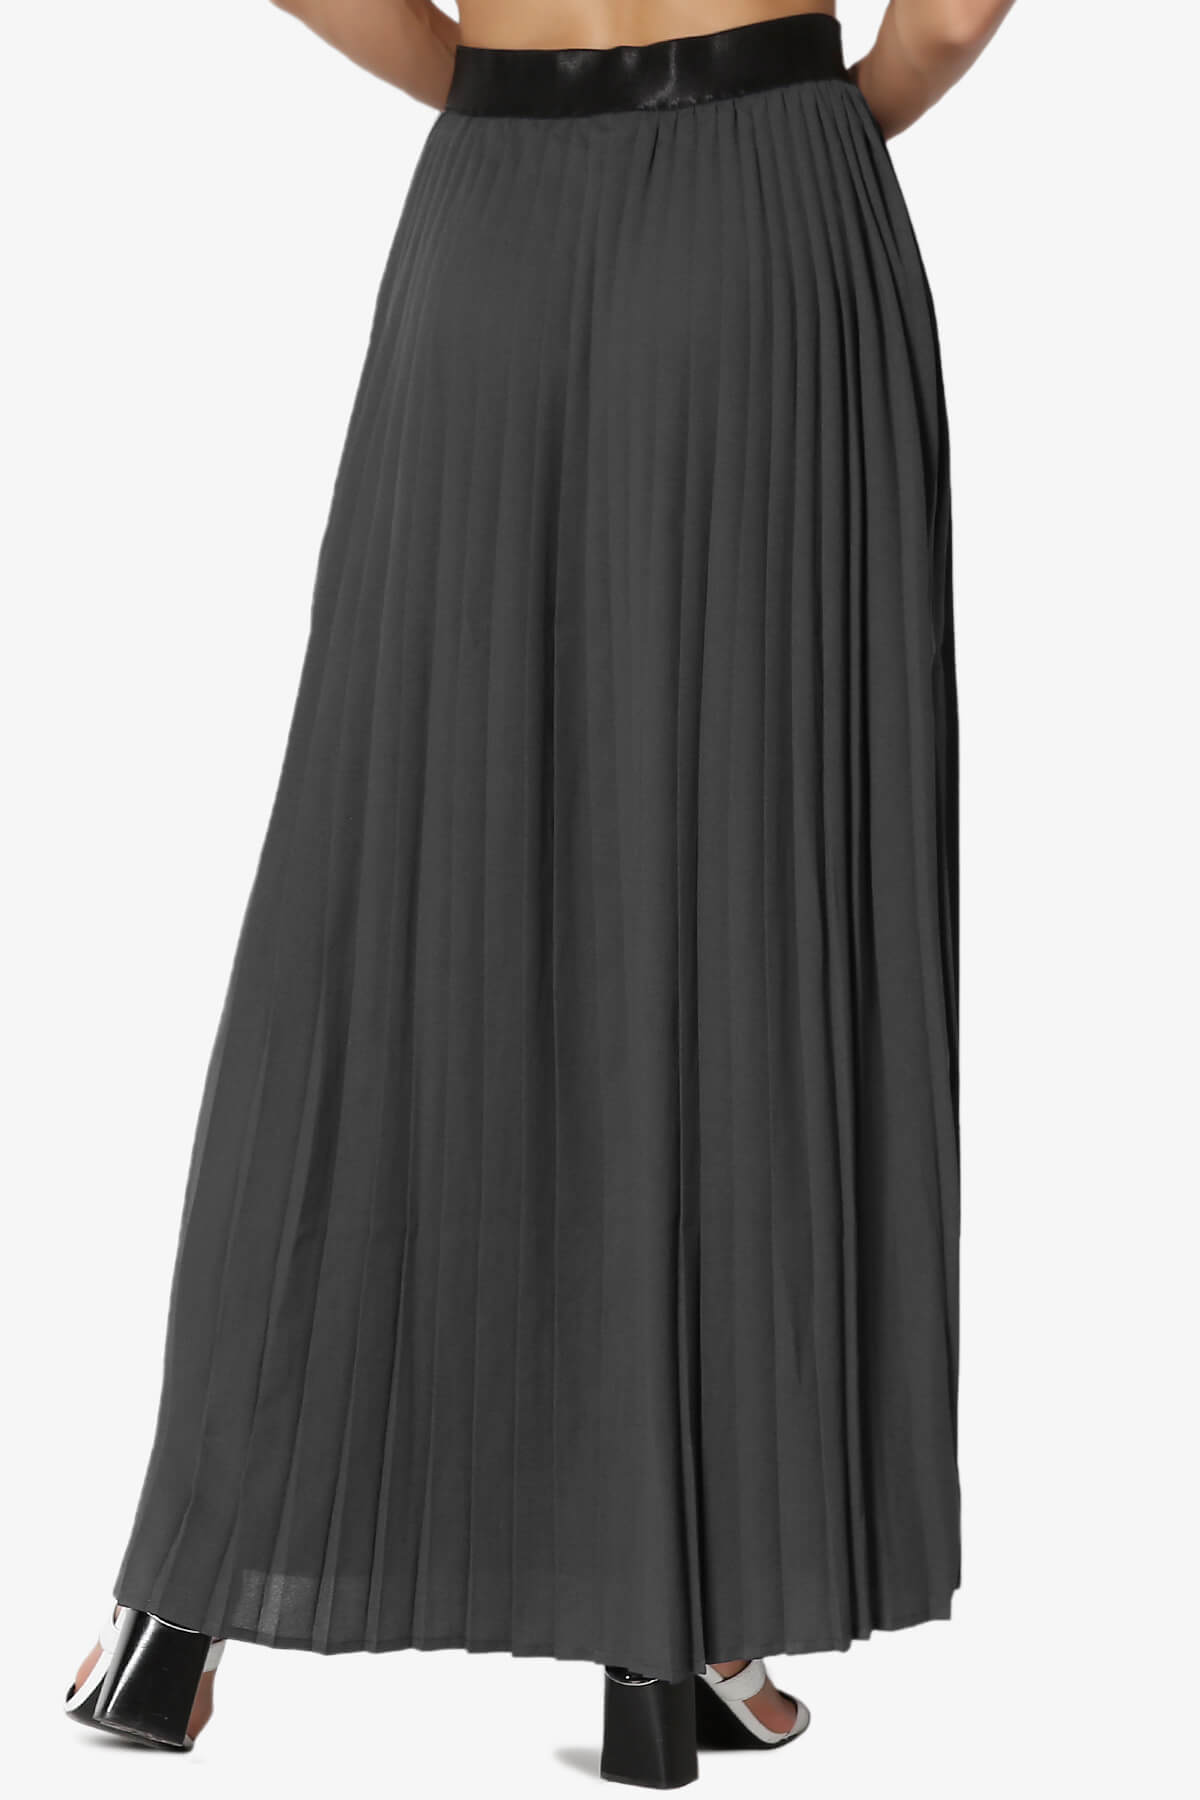 Barria Flowy Maxi Pleated Skirt ASH GREY_2